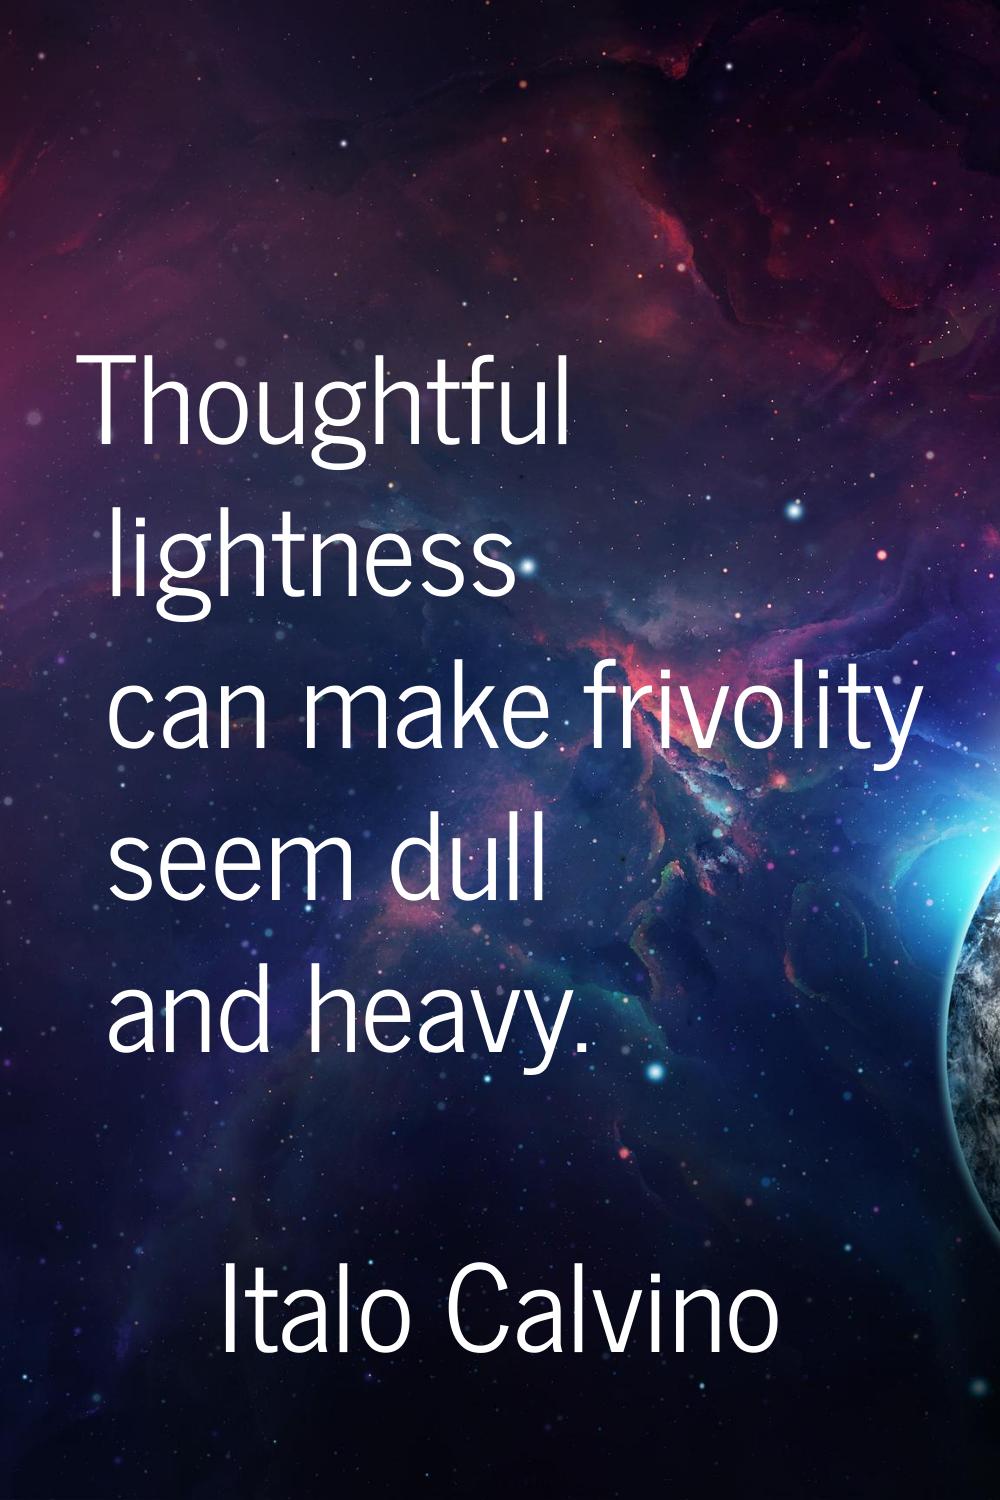 Thoughtful lightness can make frivolity seem dull and heavy.